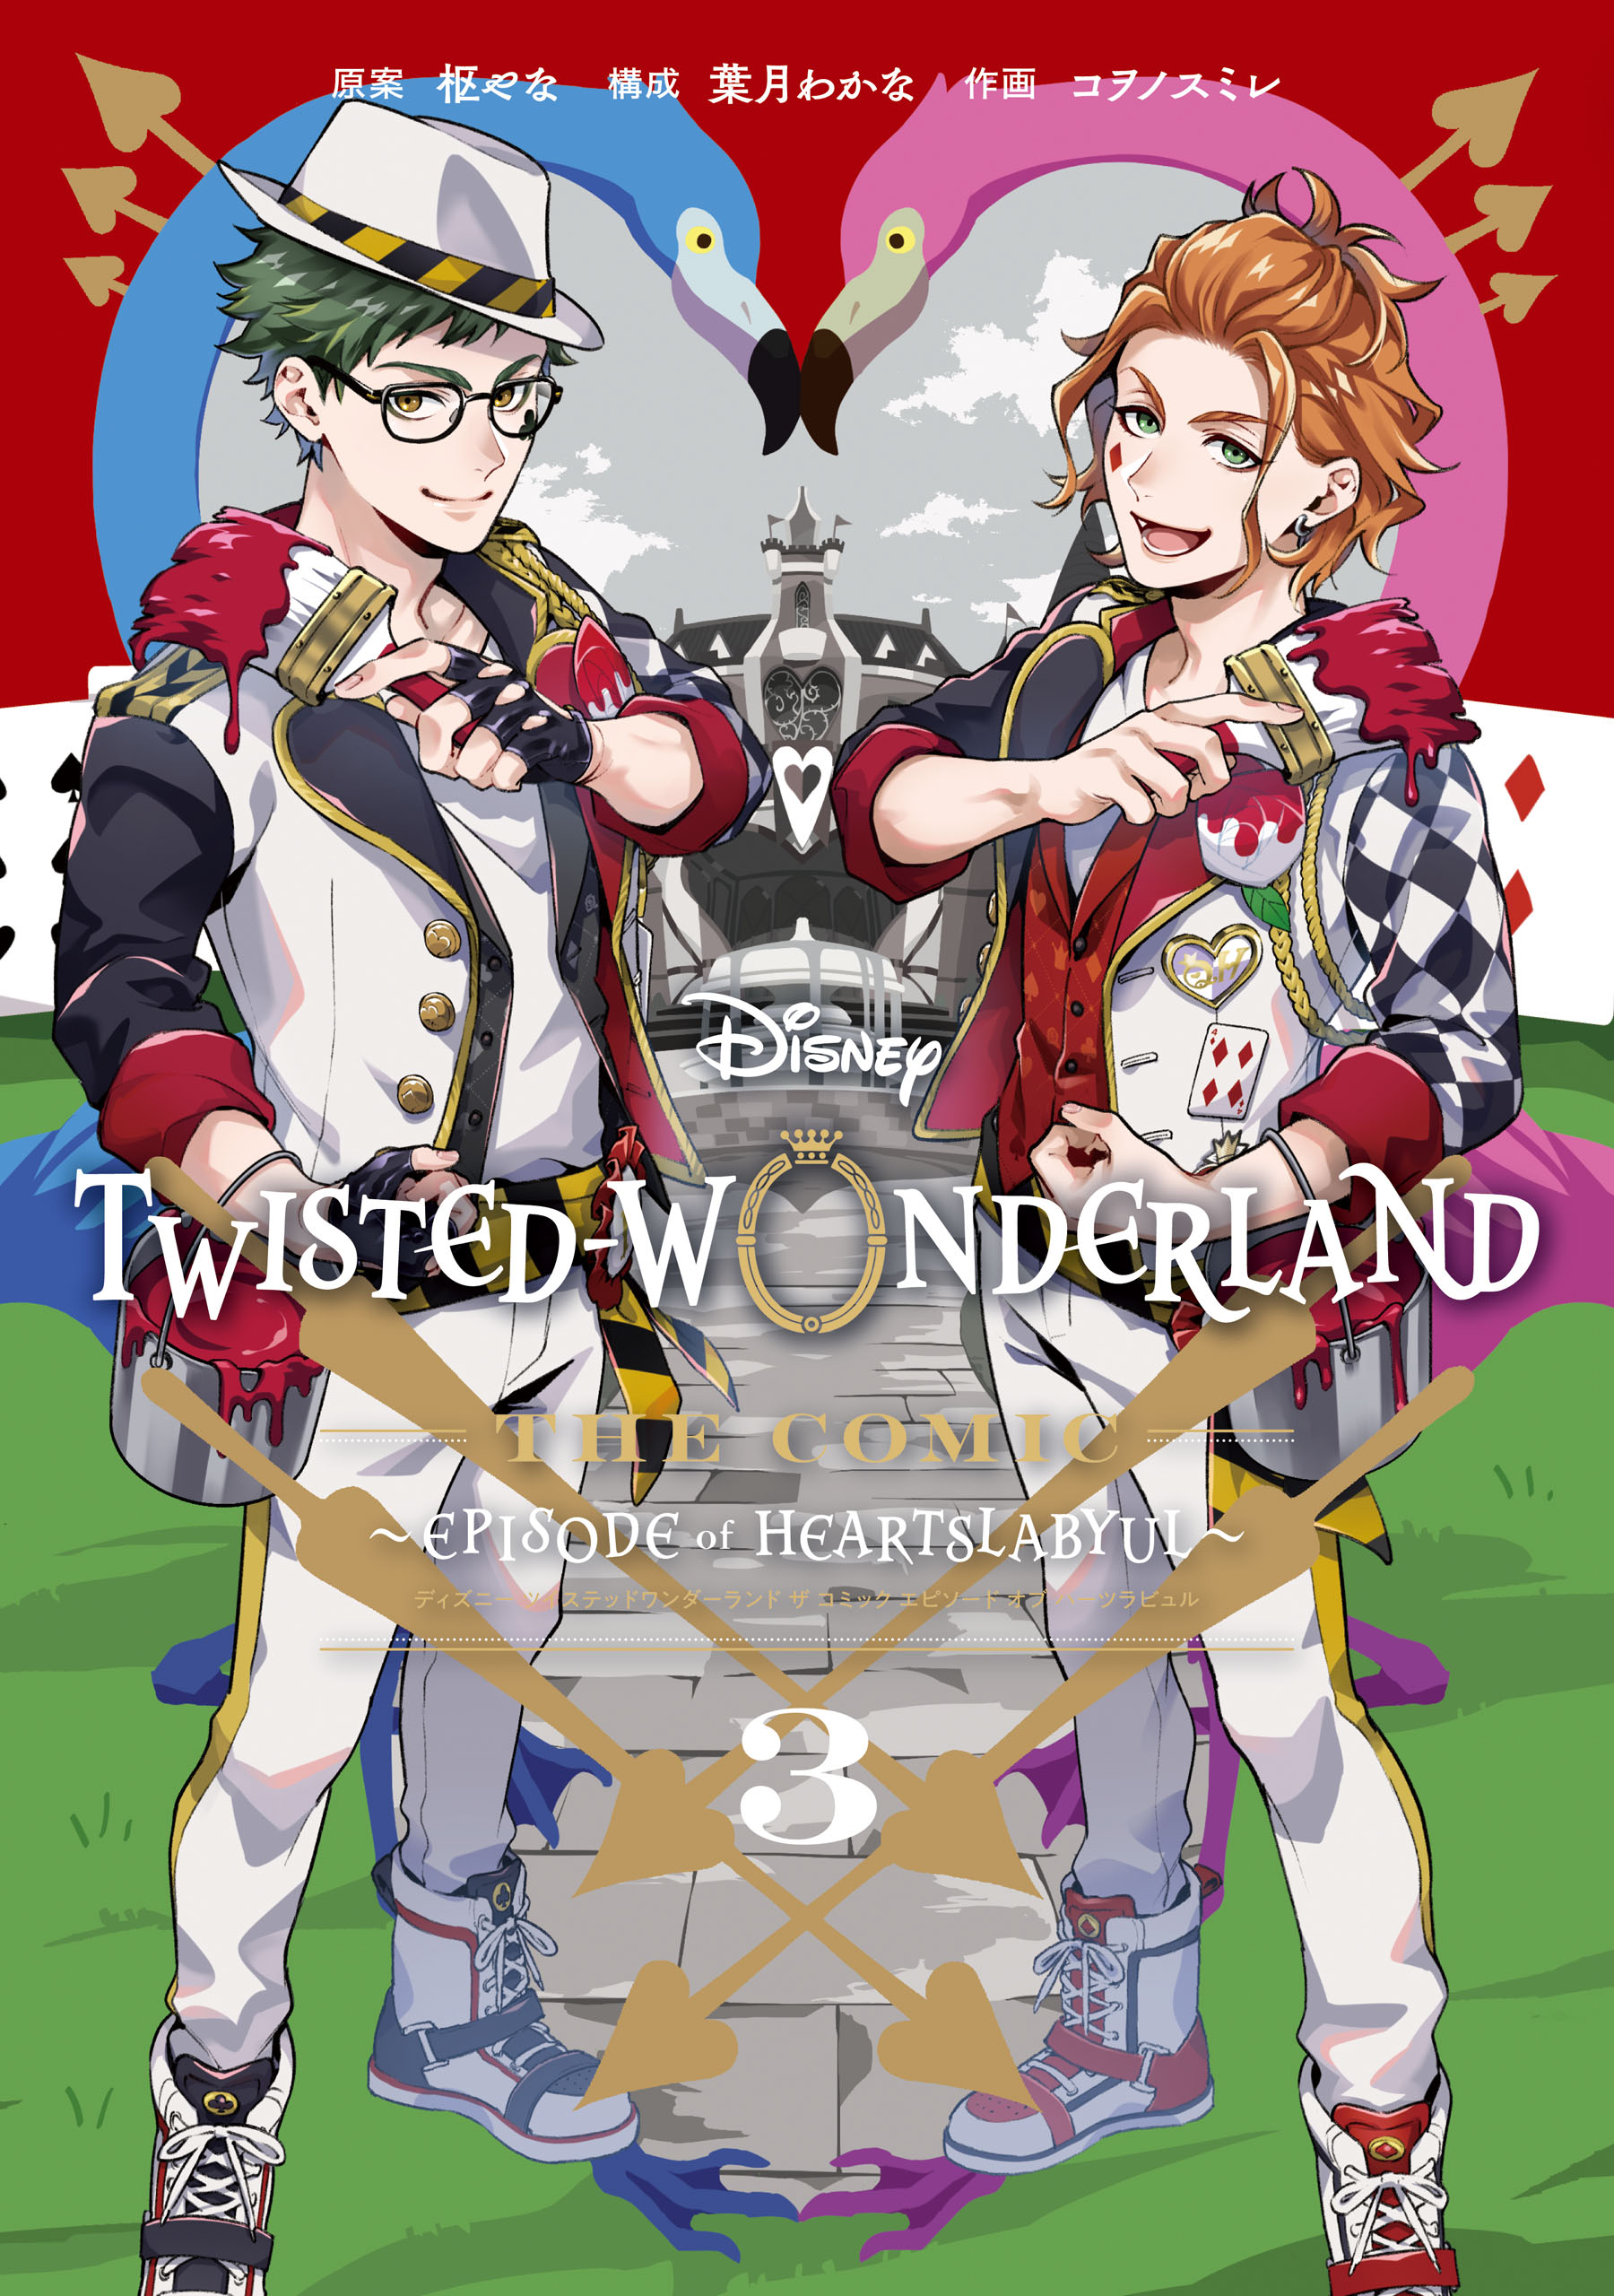 Disney Twisted-Wonderland The Comic Episode of Heartslabyul 3巻 | ブックライブ